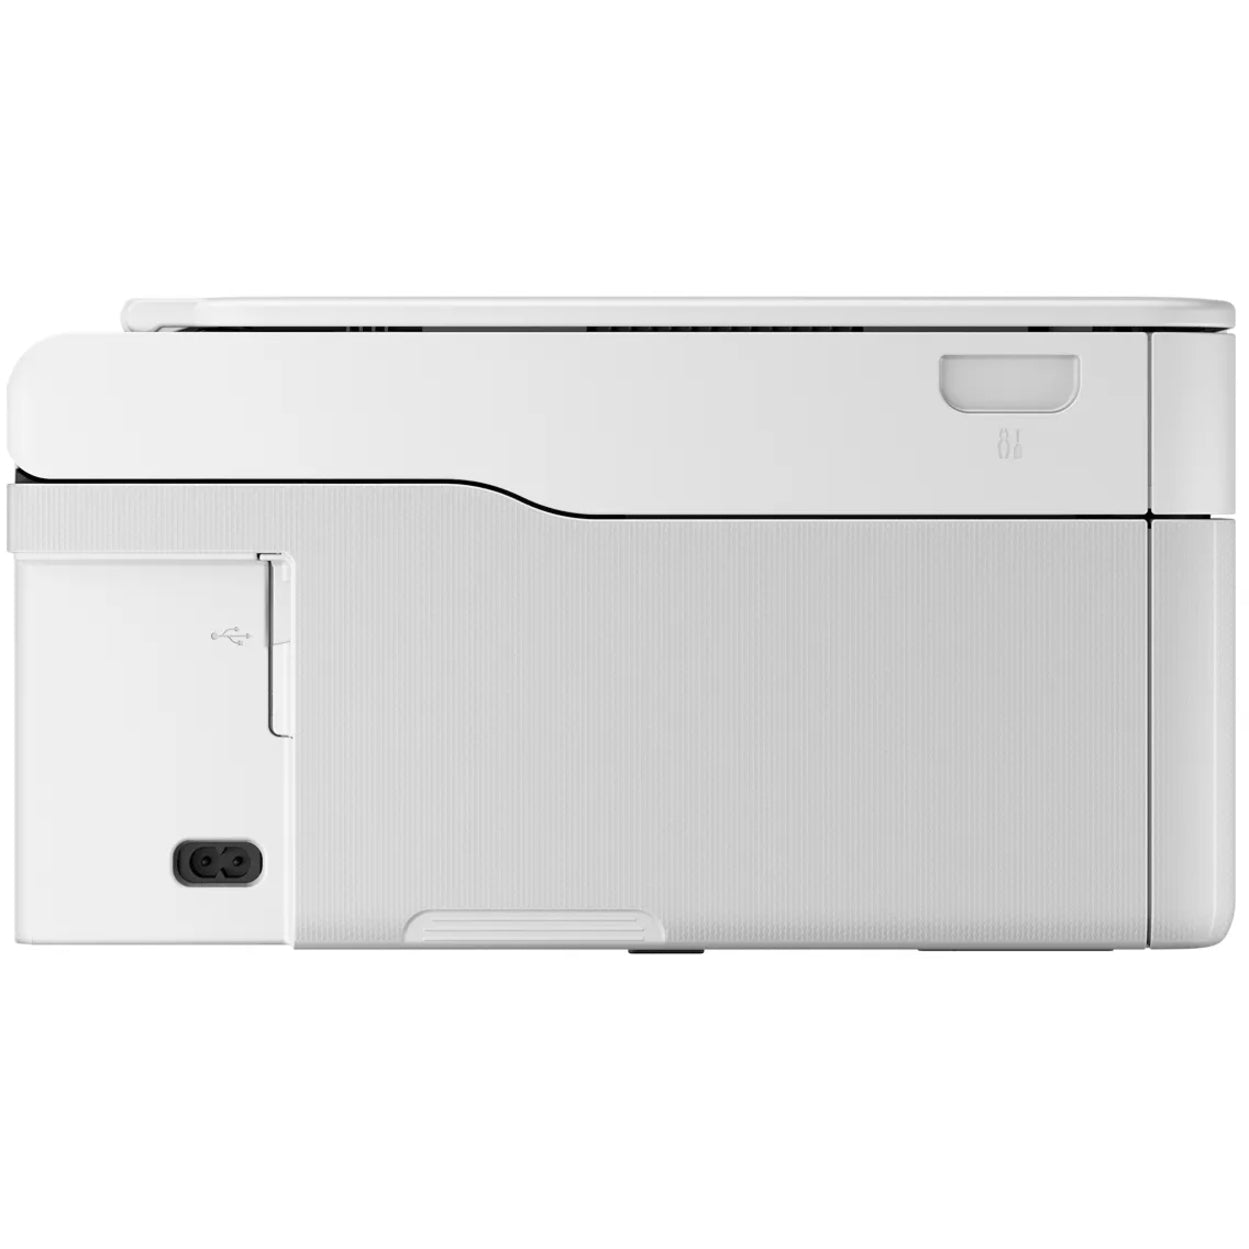 Canon 5805C022 PIXMA G3270 Wireless Inkjet Multifunction Printer, Color, White